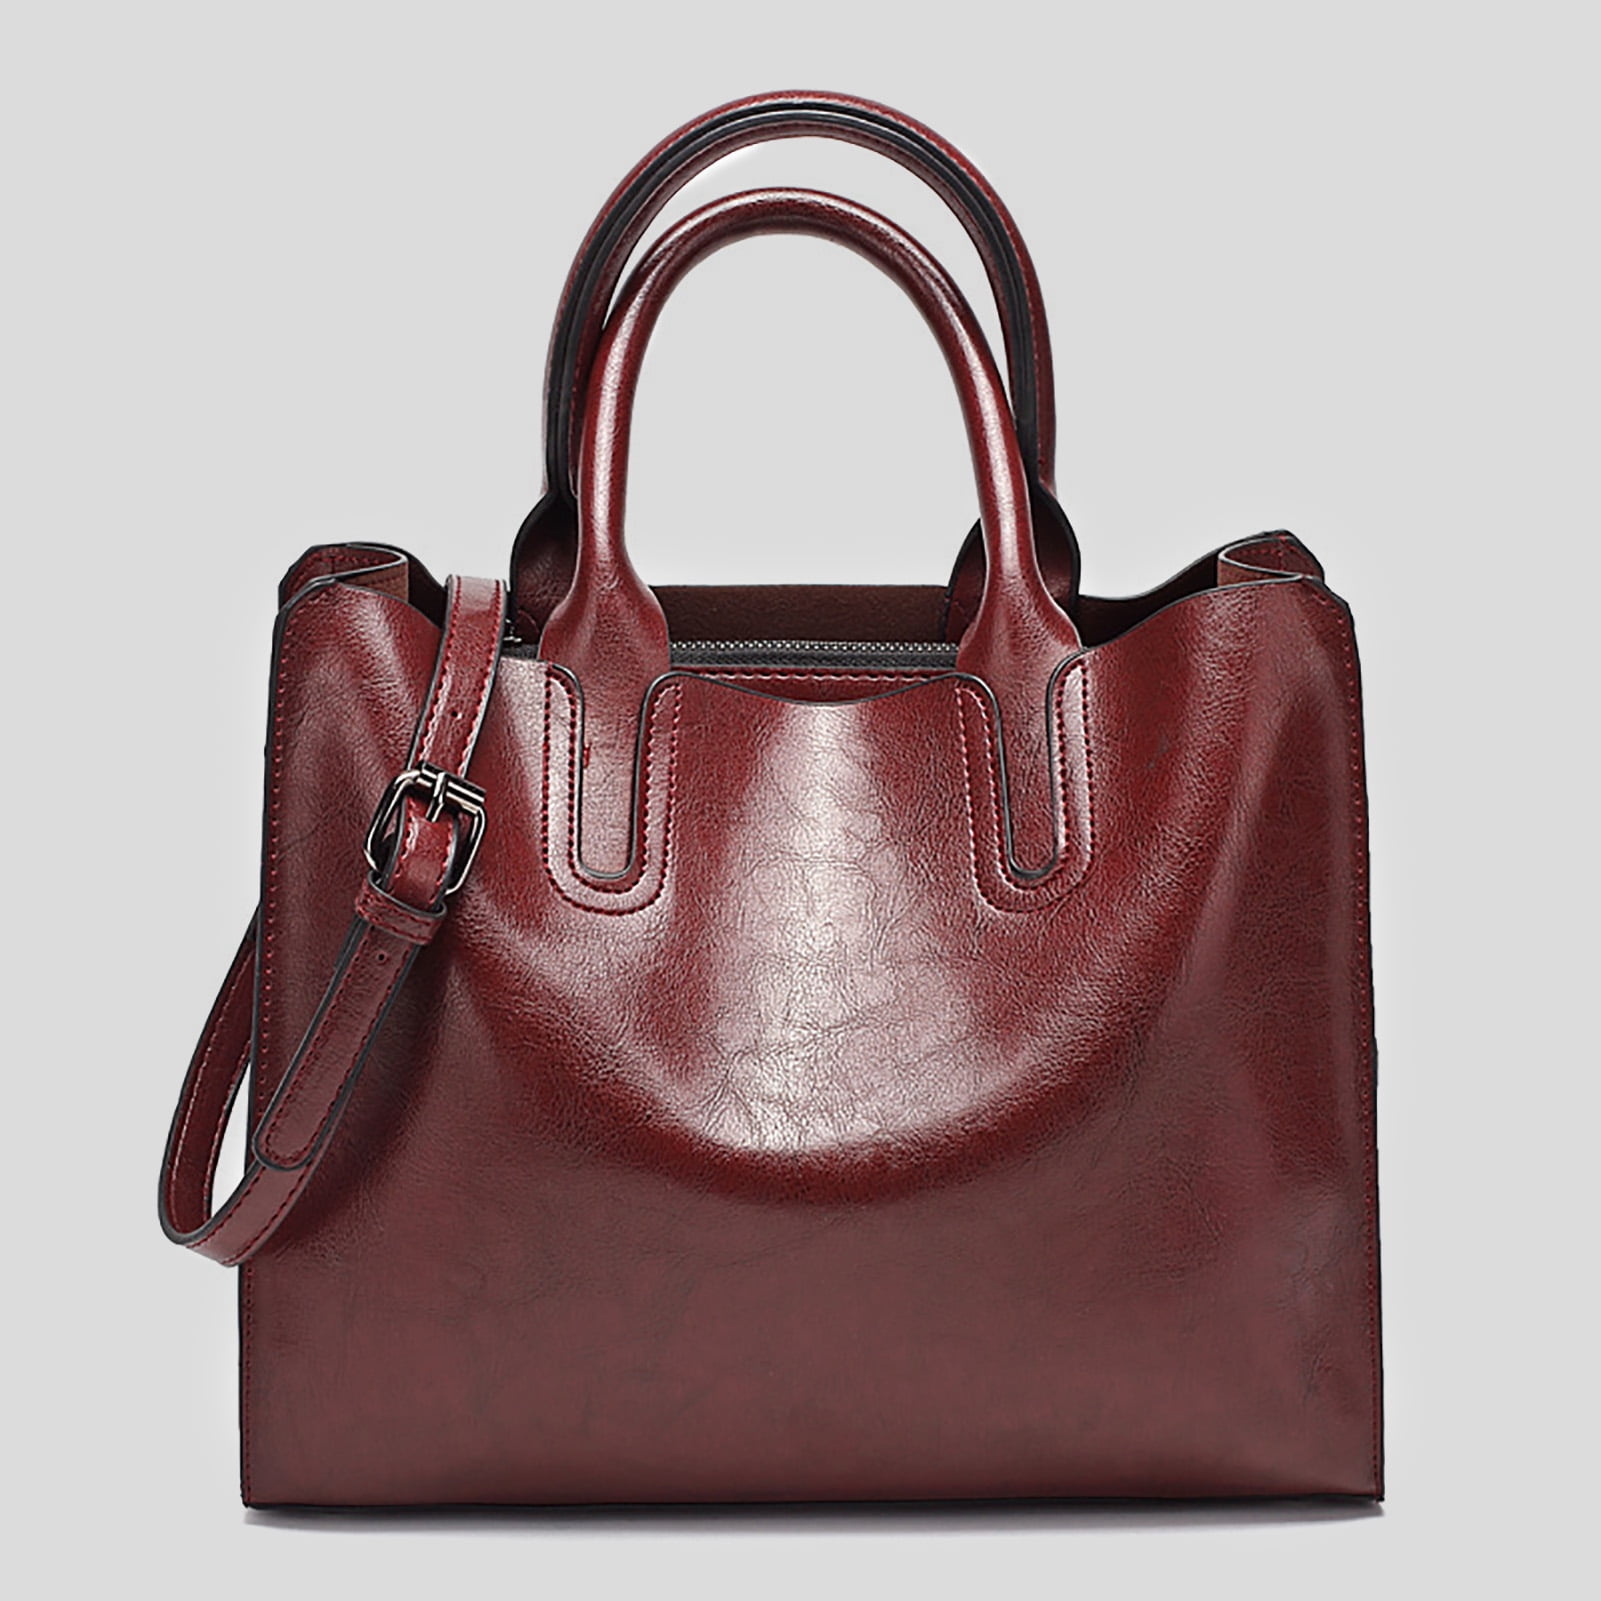 Ladies Women Retro PU Leather Handbag Shoulder Bag Satchel Cross Body Tote Bags 